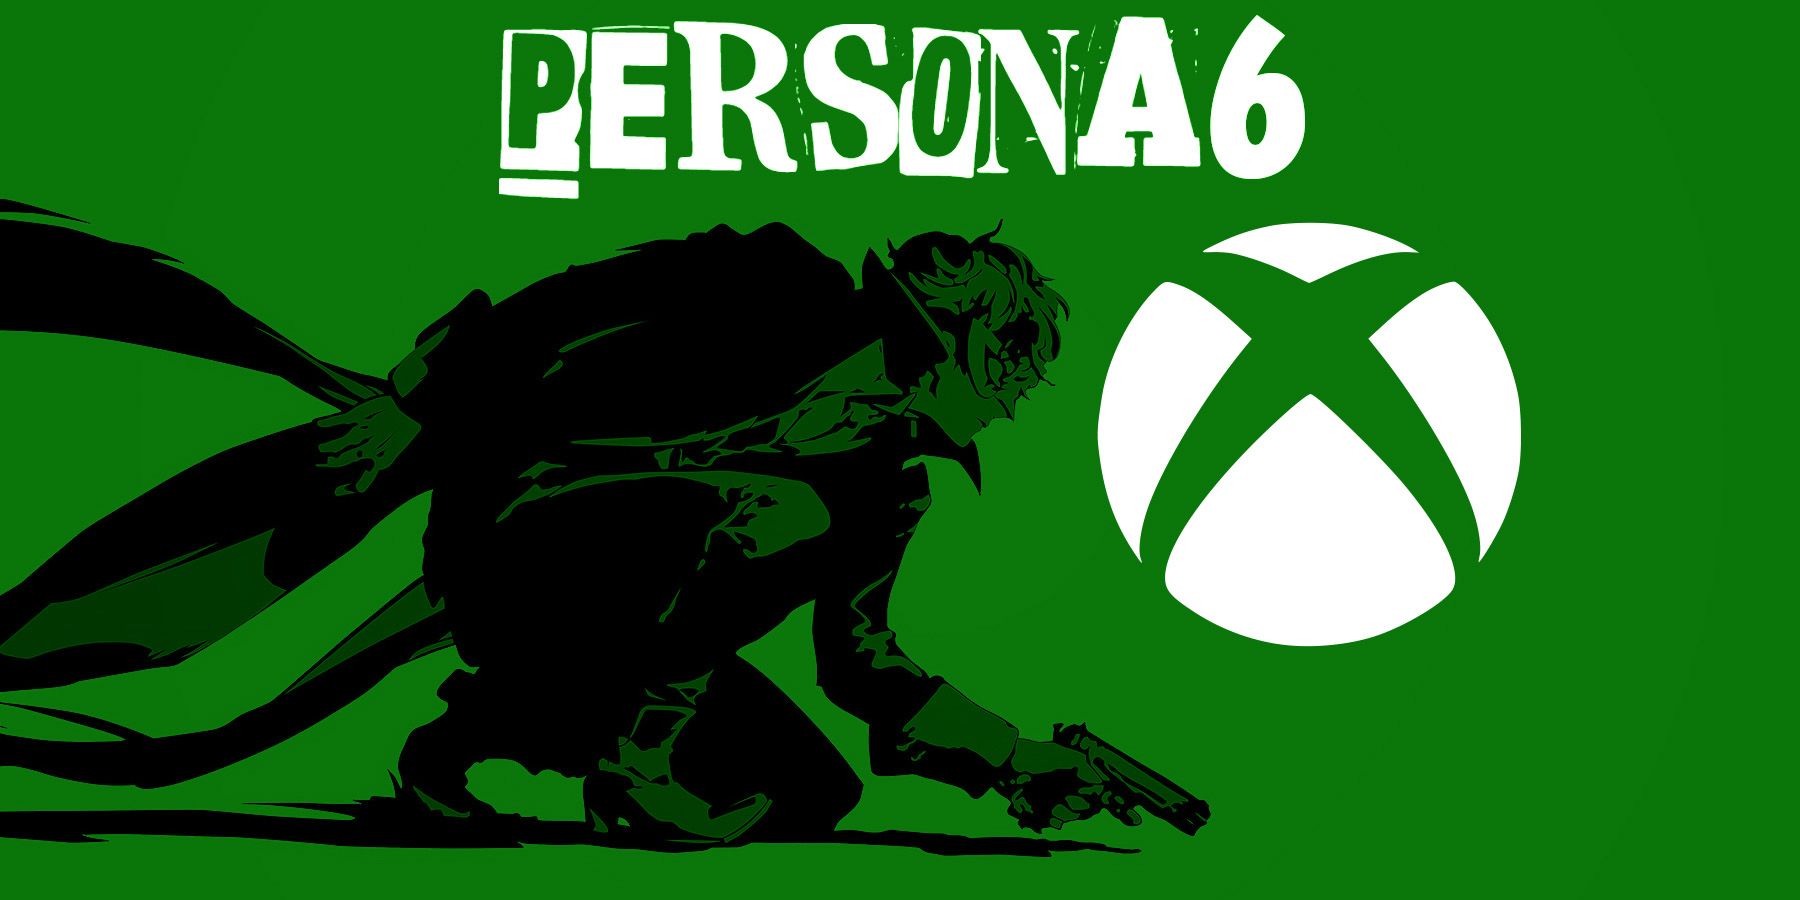 Persona 6 mockup logo on Xbox green PT Joker next to Xbox emblem